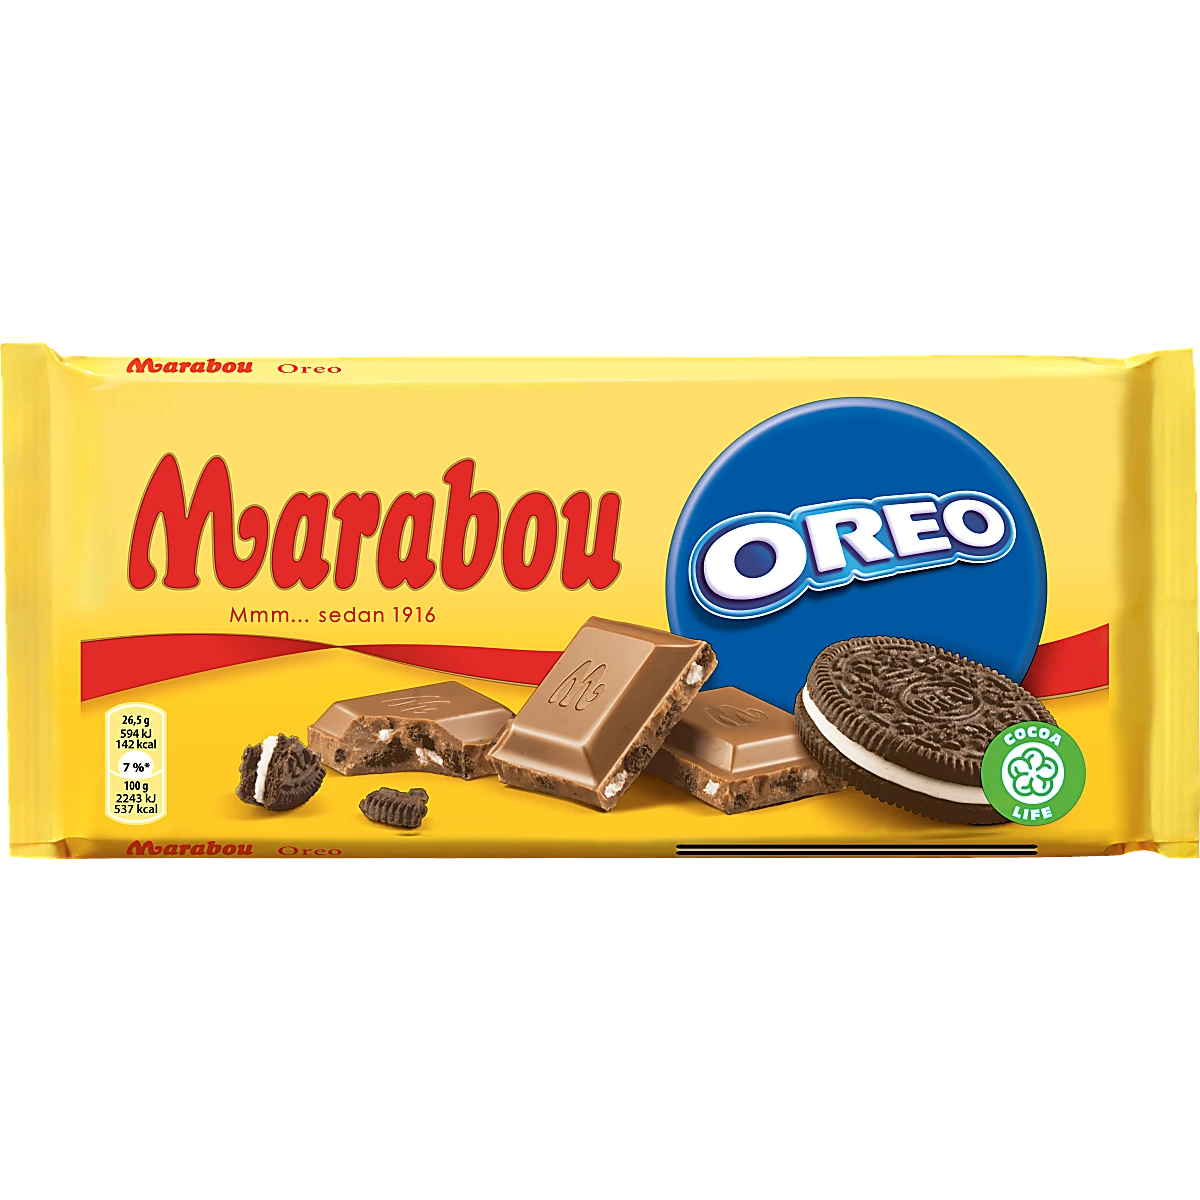 Marabou Milk Chocolate with Oreo Crumbs.